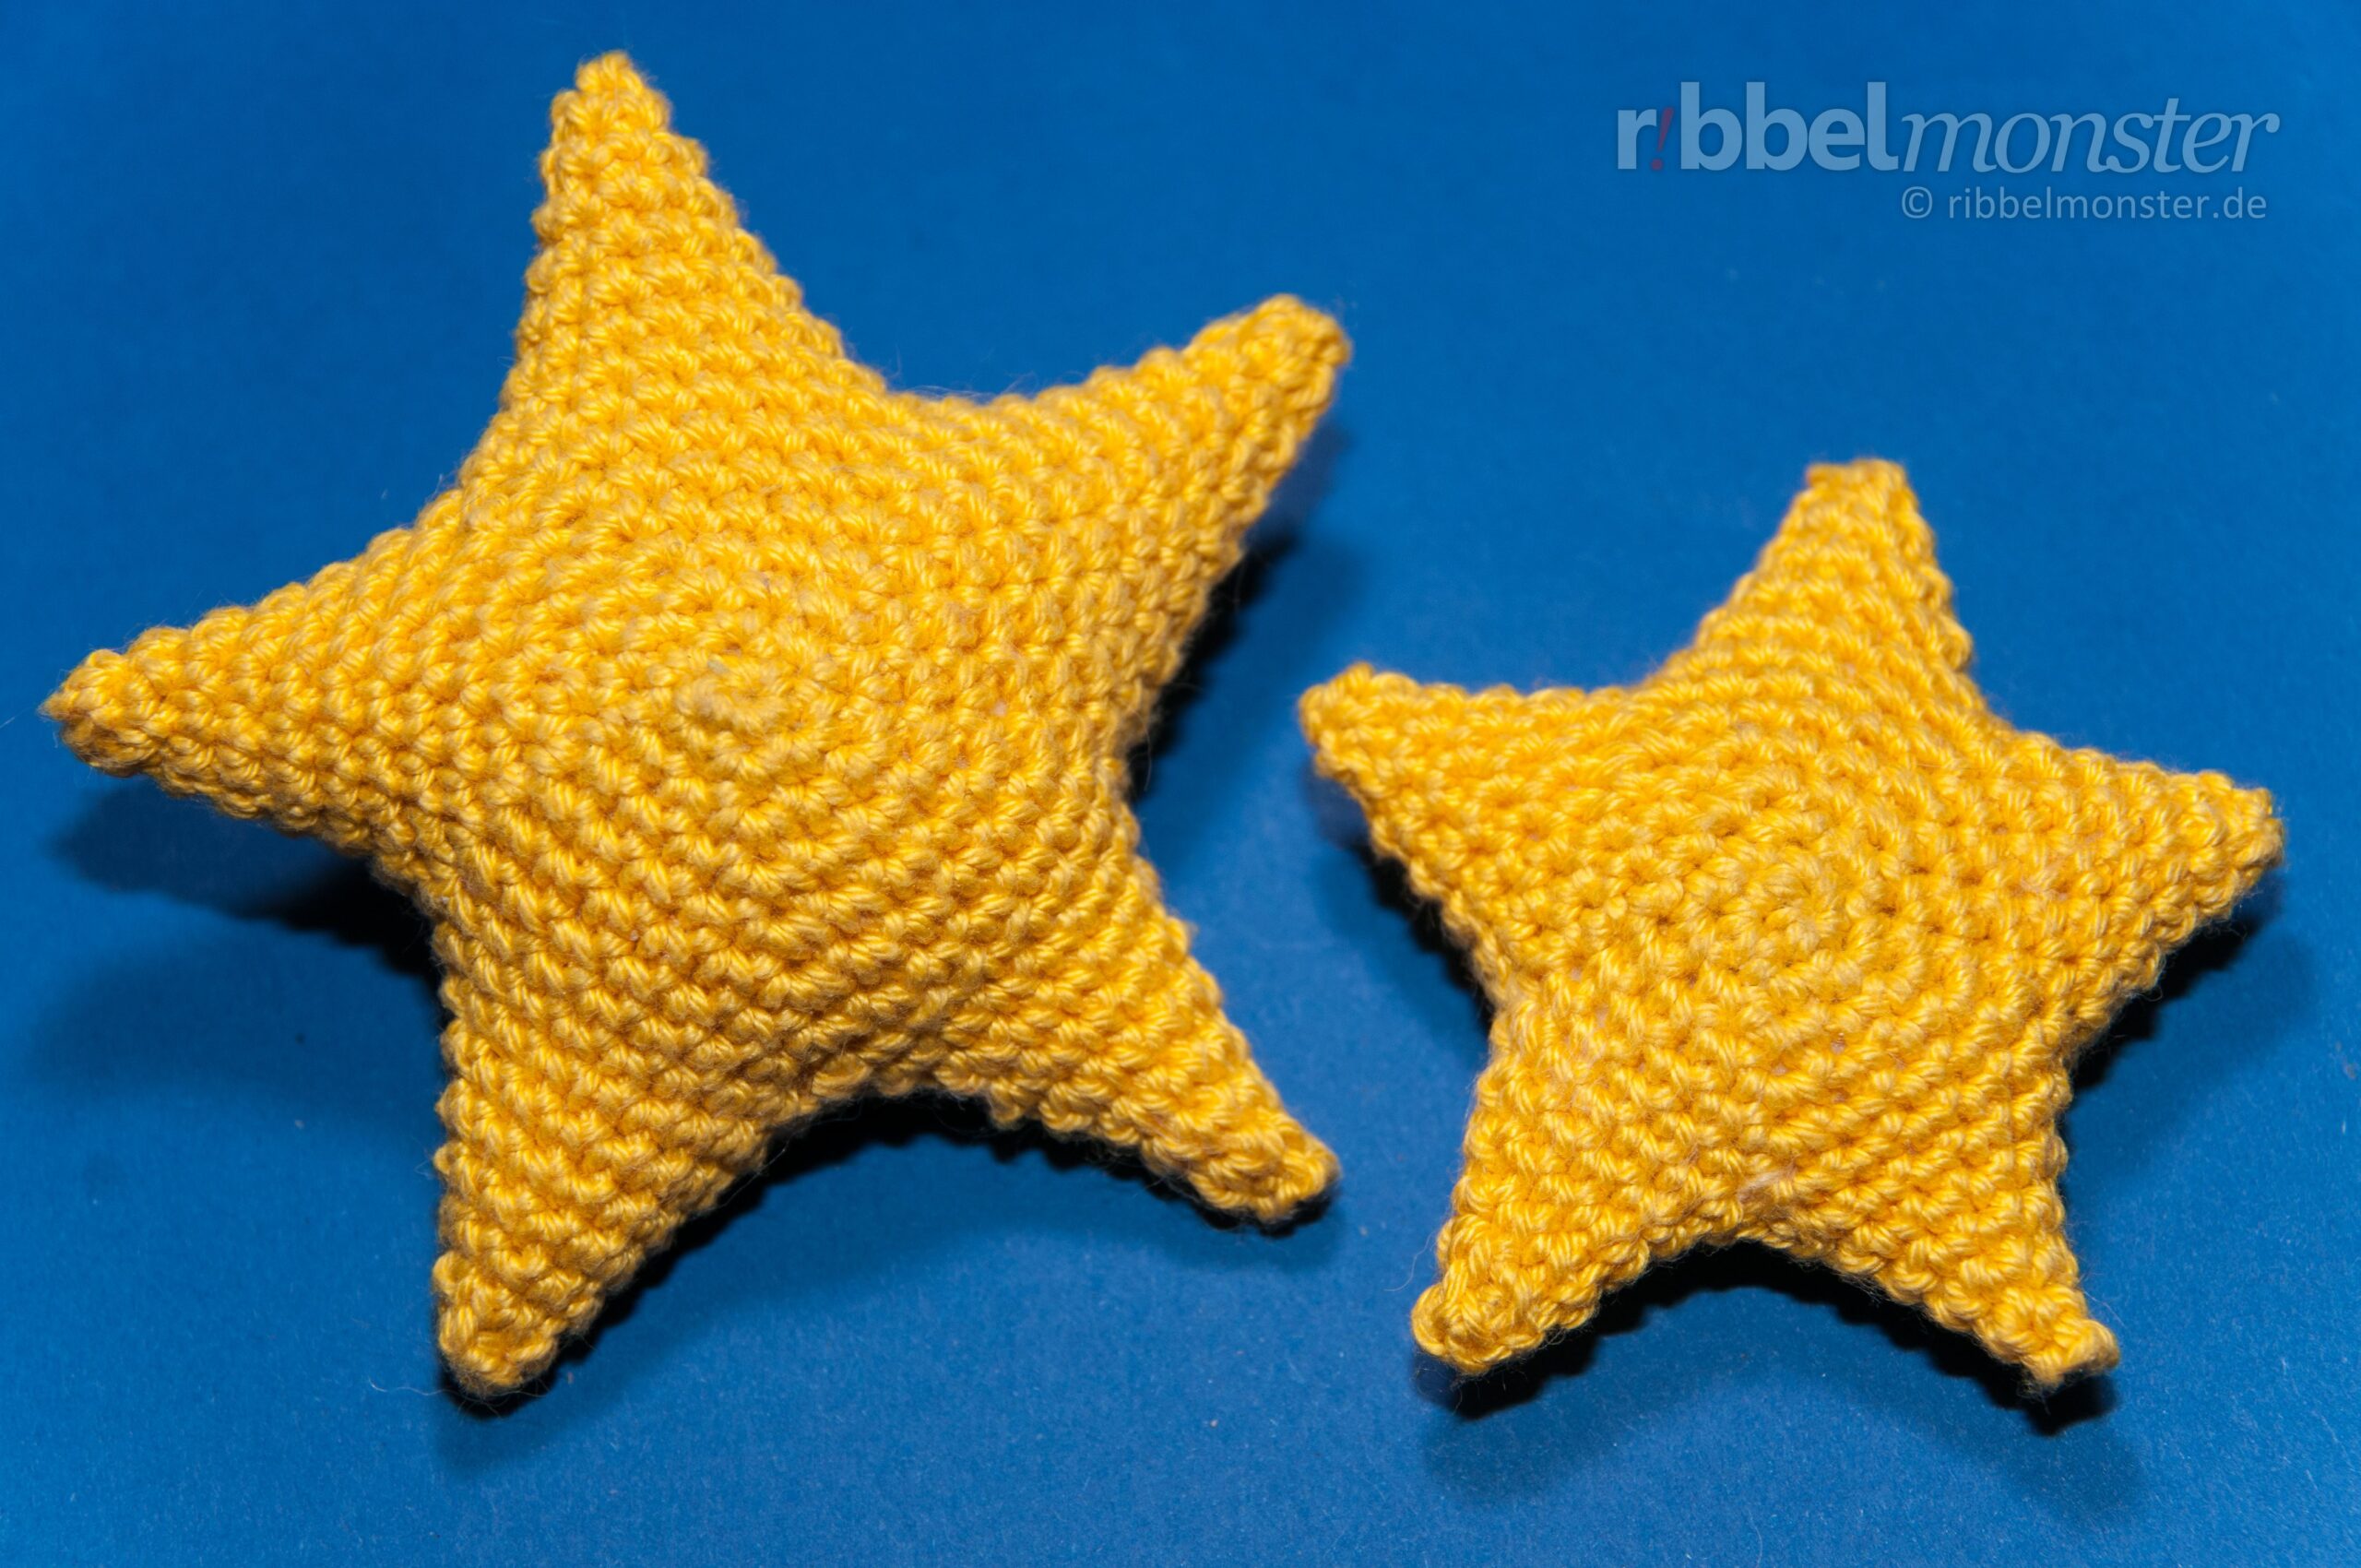 Amigurumi – Crochet Star